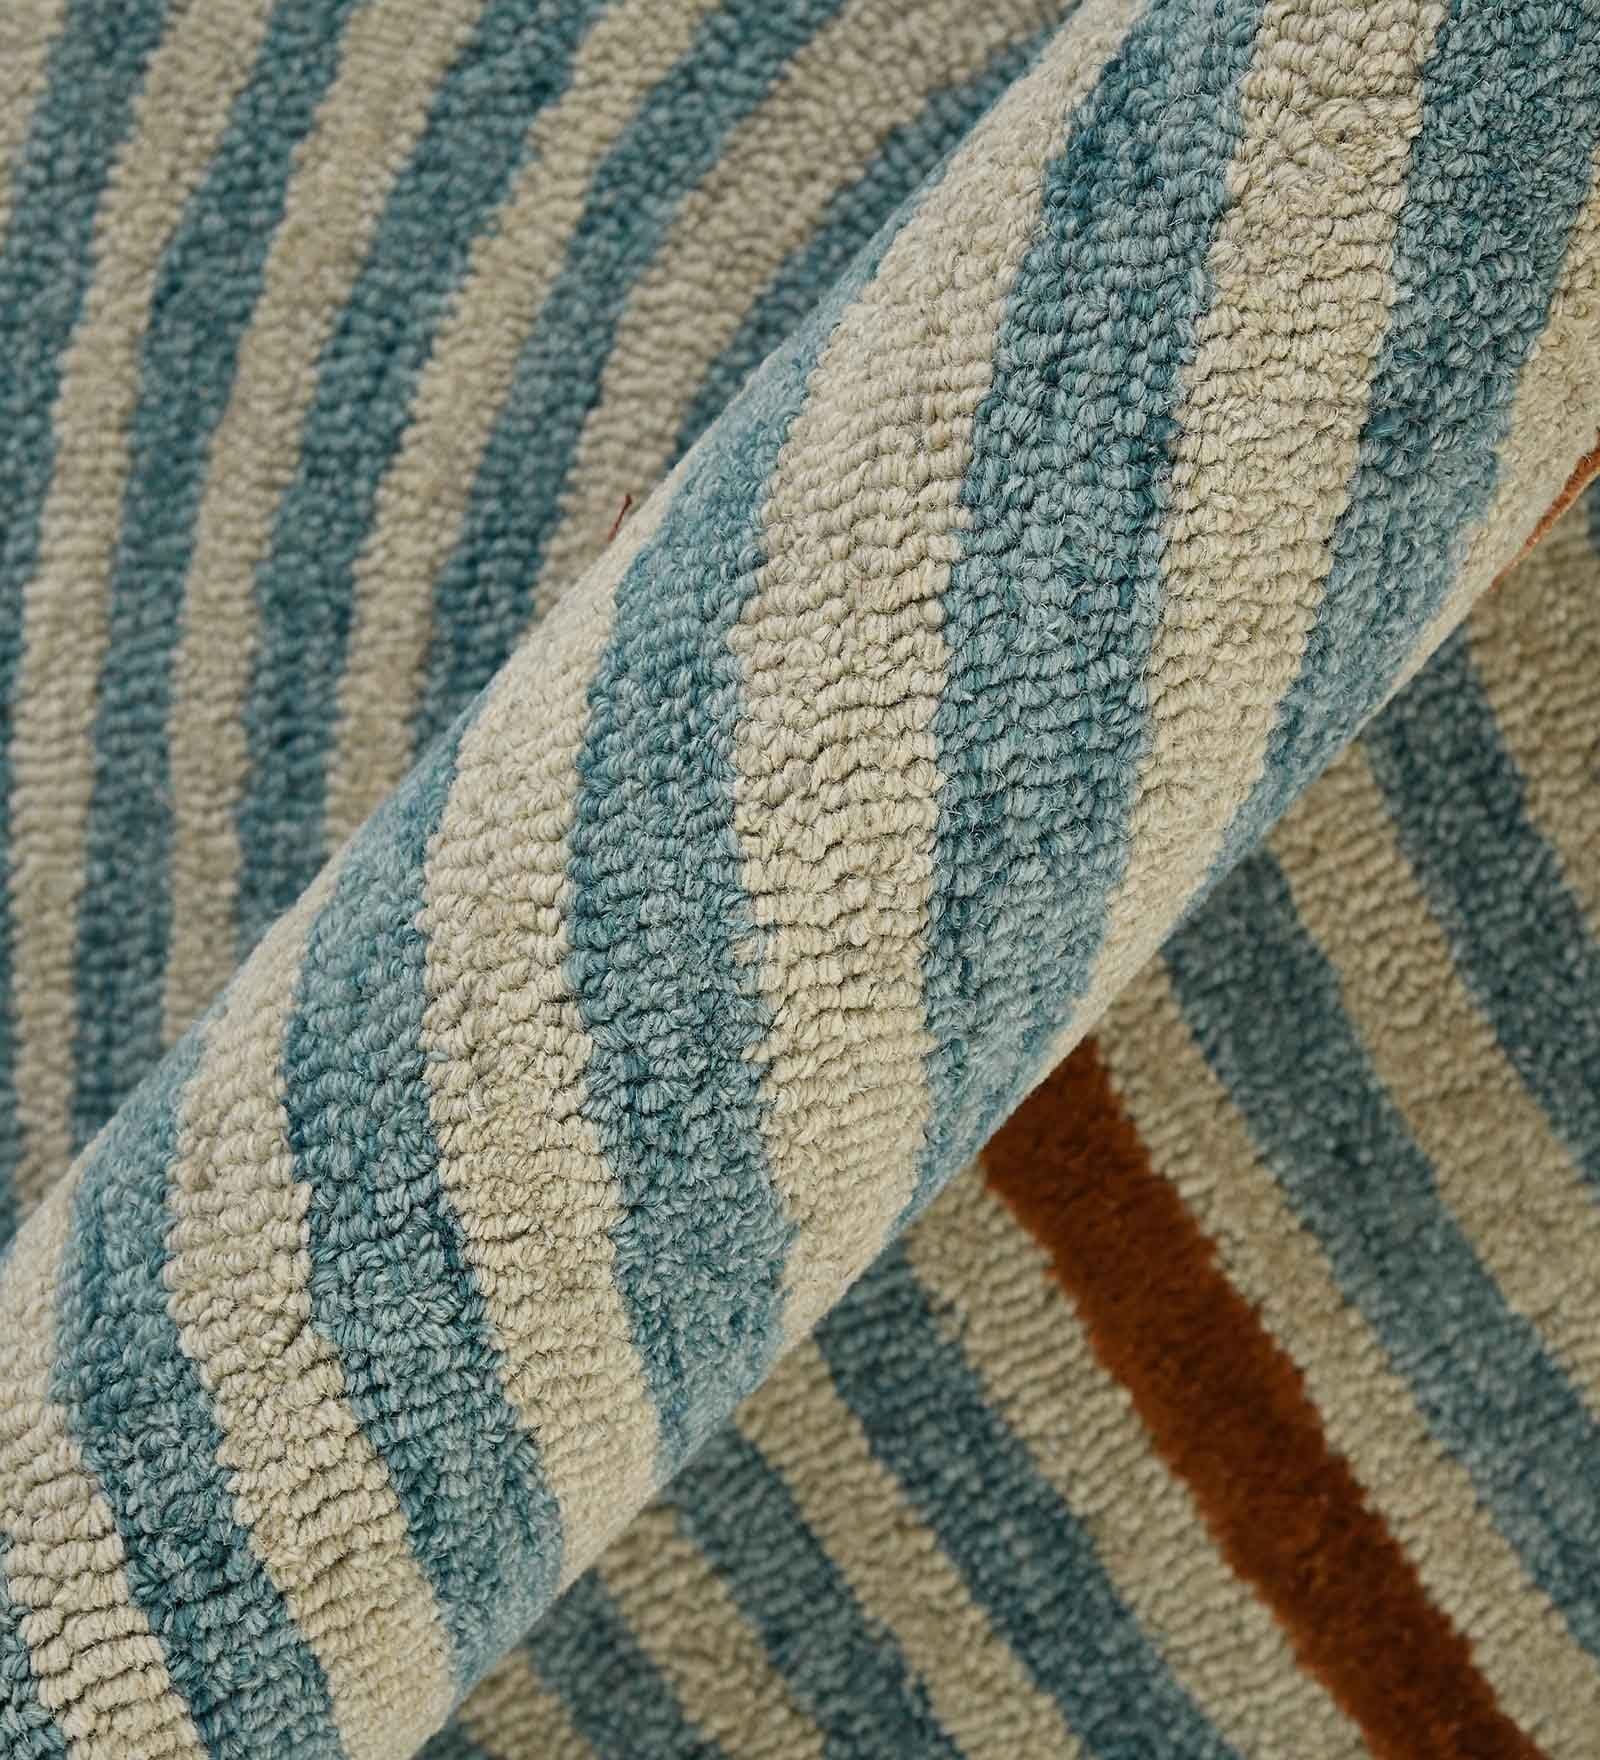 IVORY Wool & Viscose Canyan 4x6 Feet  Hand-Tufted Carpet - Rug